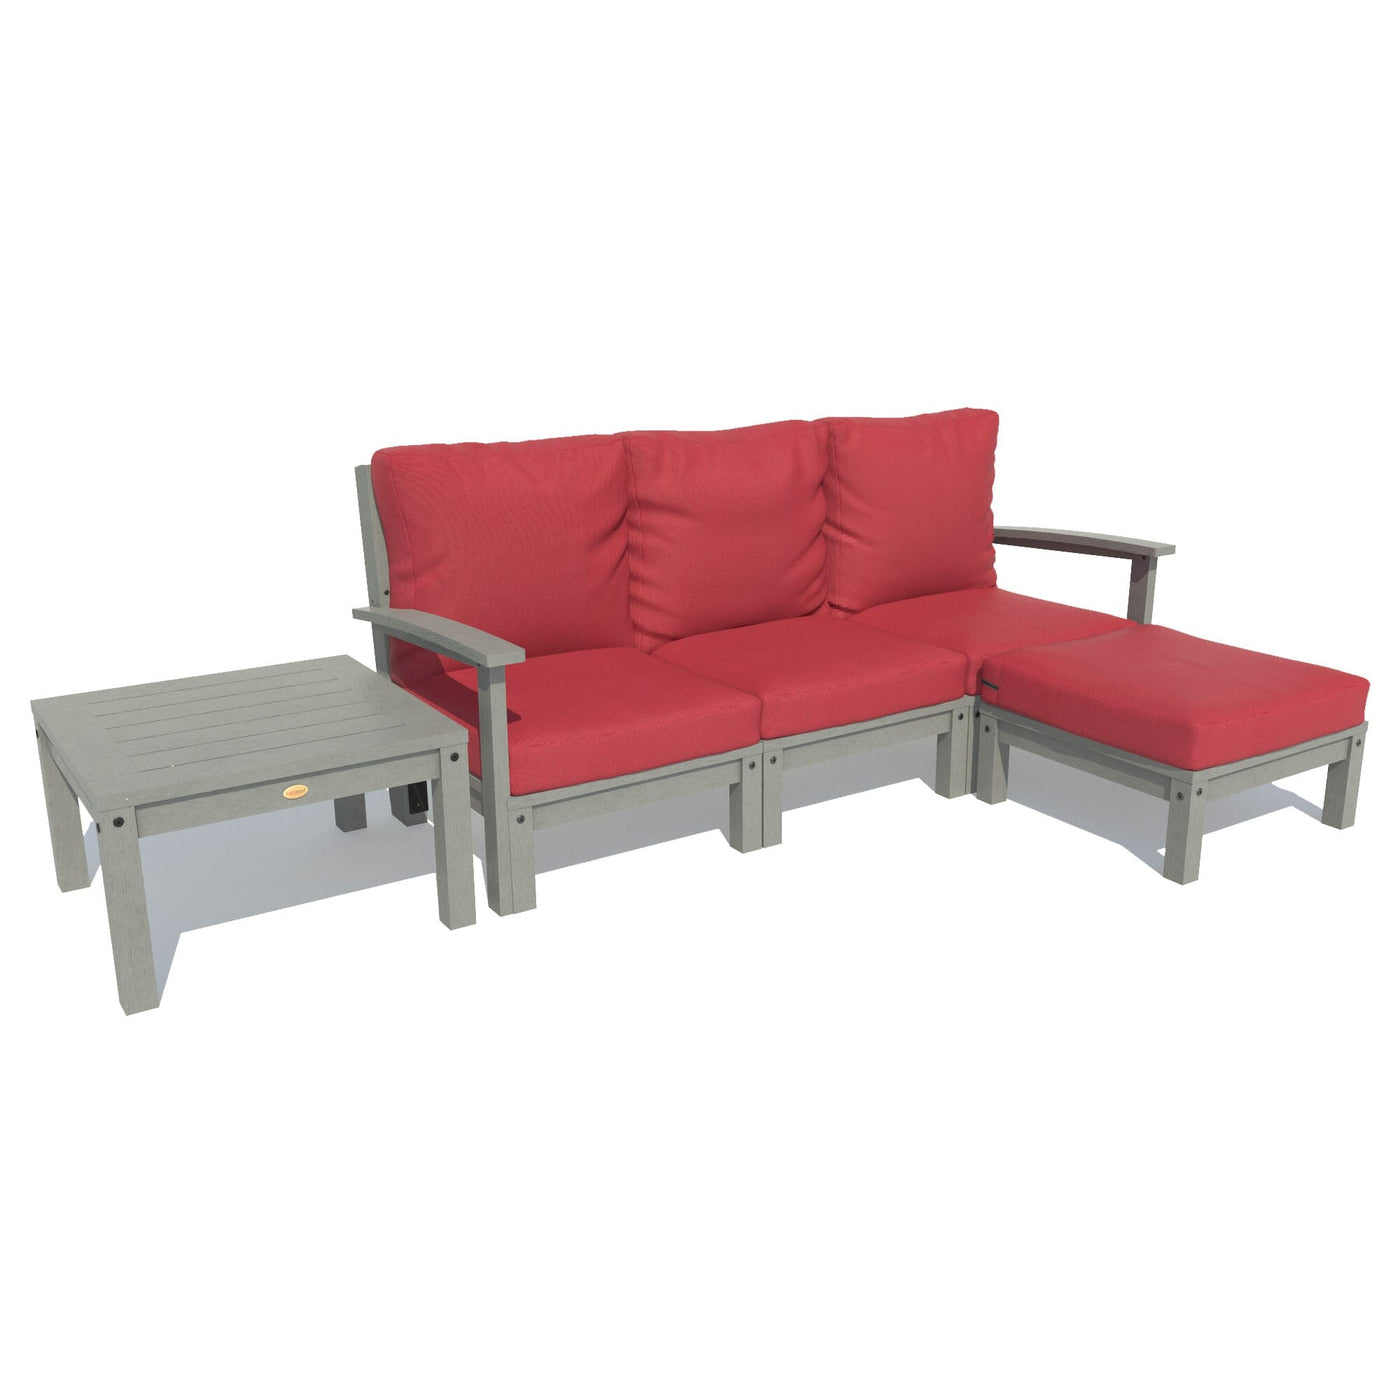 Bespoke Deep Seating: Sofa, Ottoman, and Side Table Deep Seating Highwood USA Firecracker Red Coastal Teak 